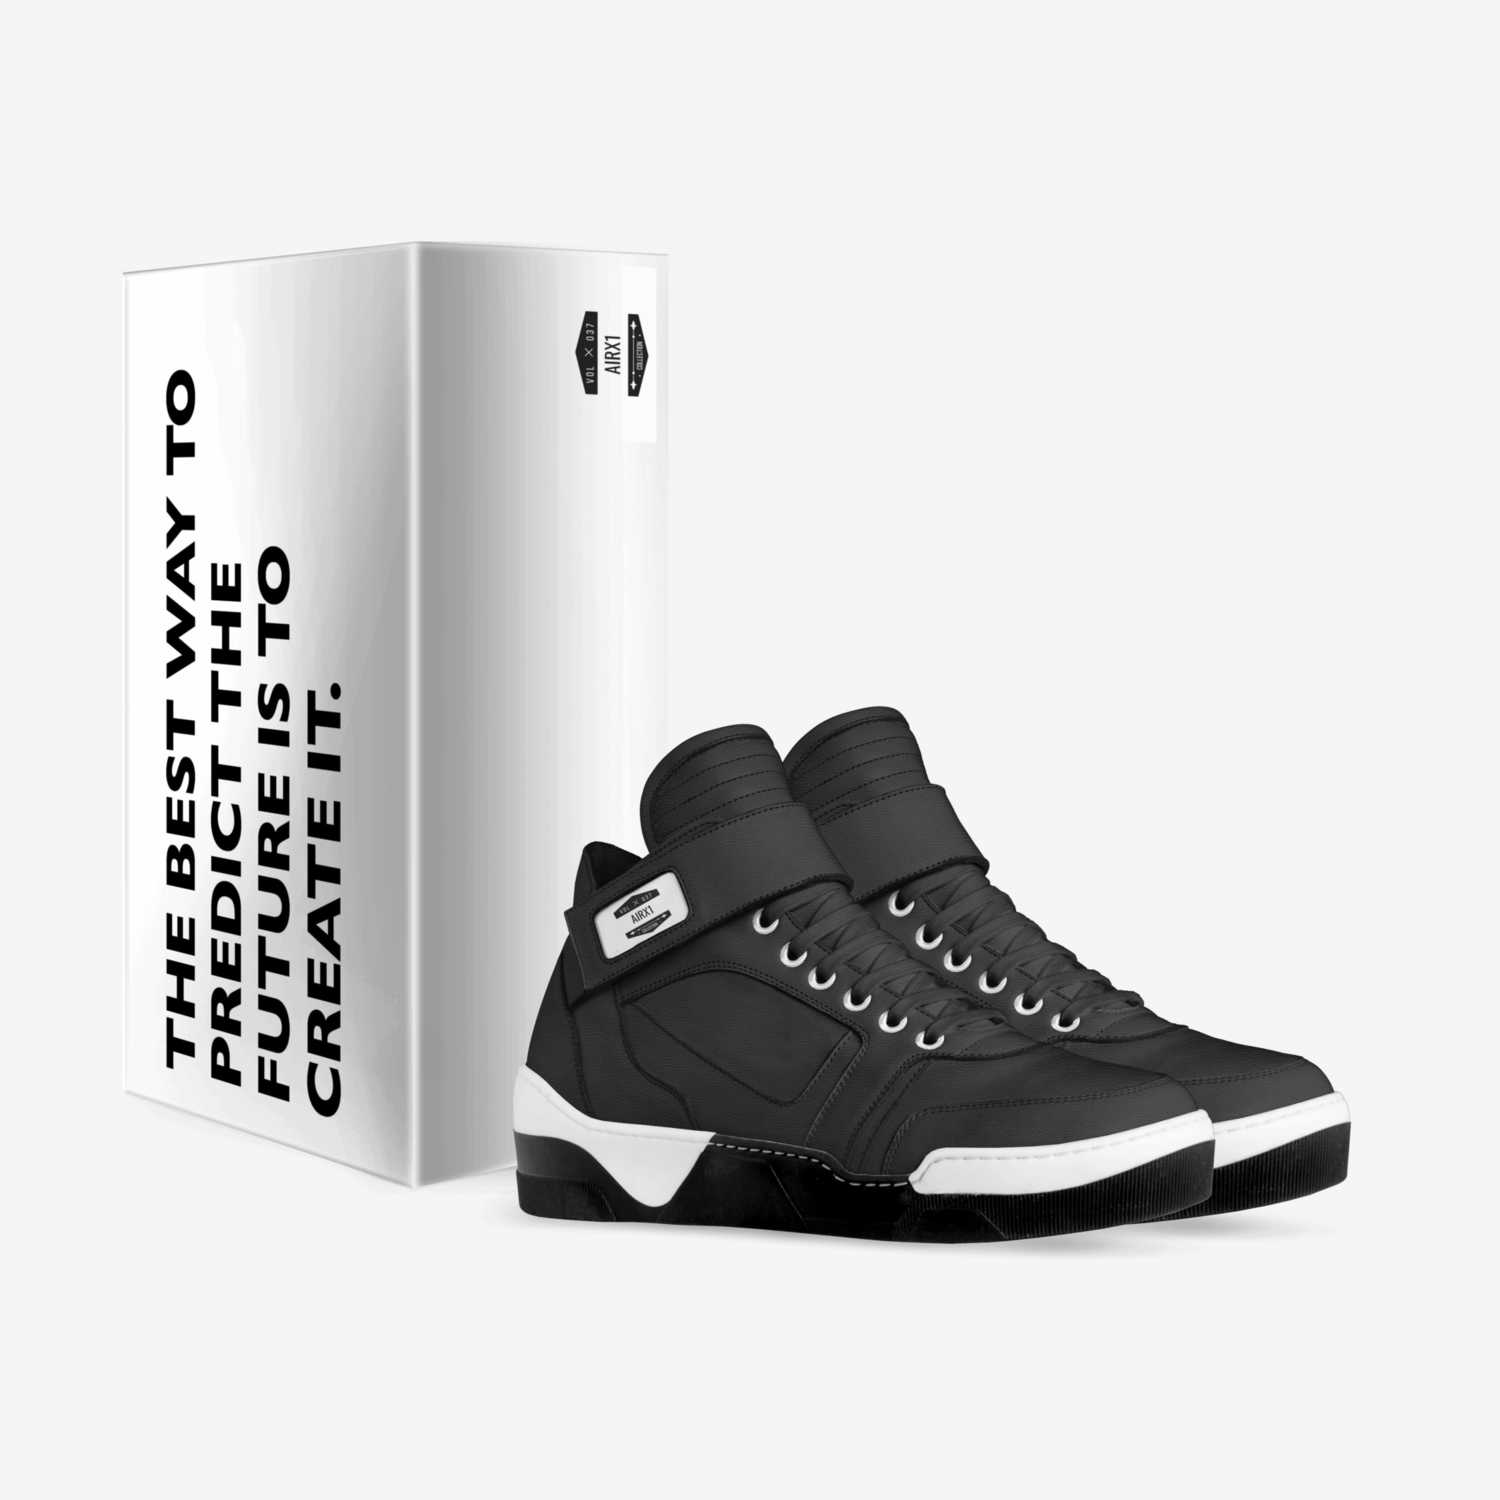 Xavier 1 custom made in Italy shoes by Xavier Villafan | Box view